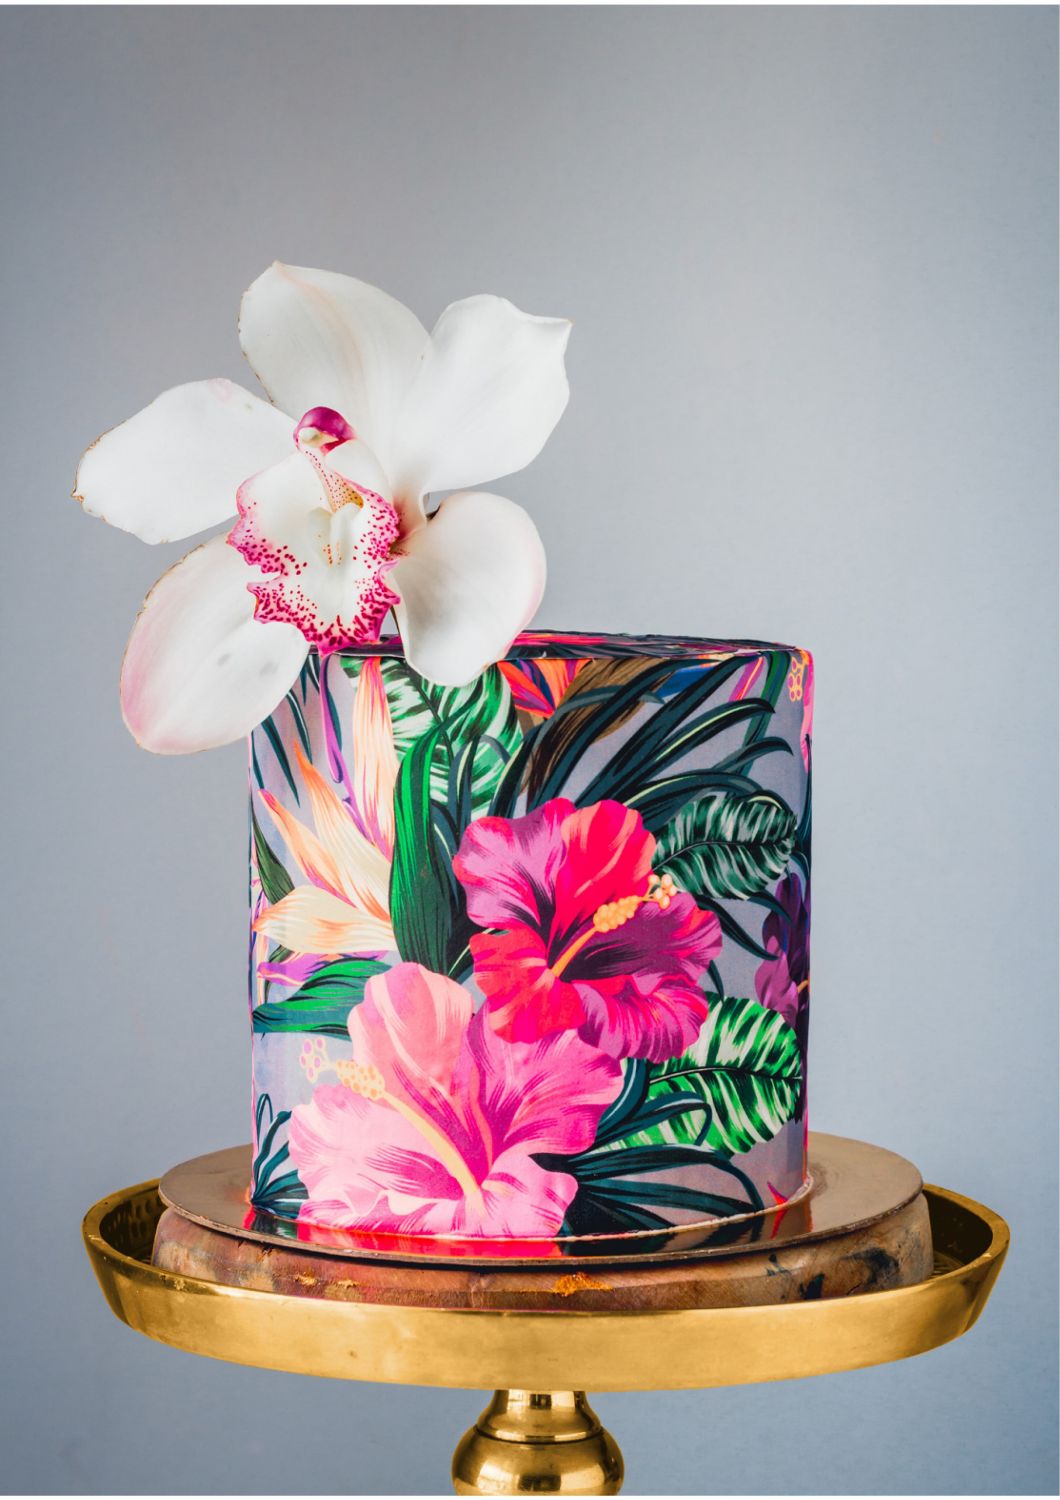 Julian Angel - Tropical prints Masterclass Cake